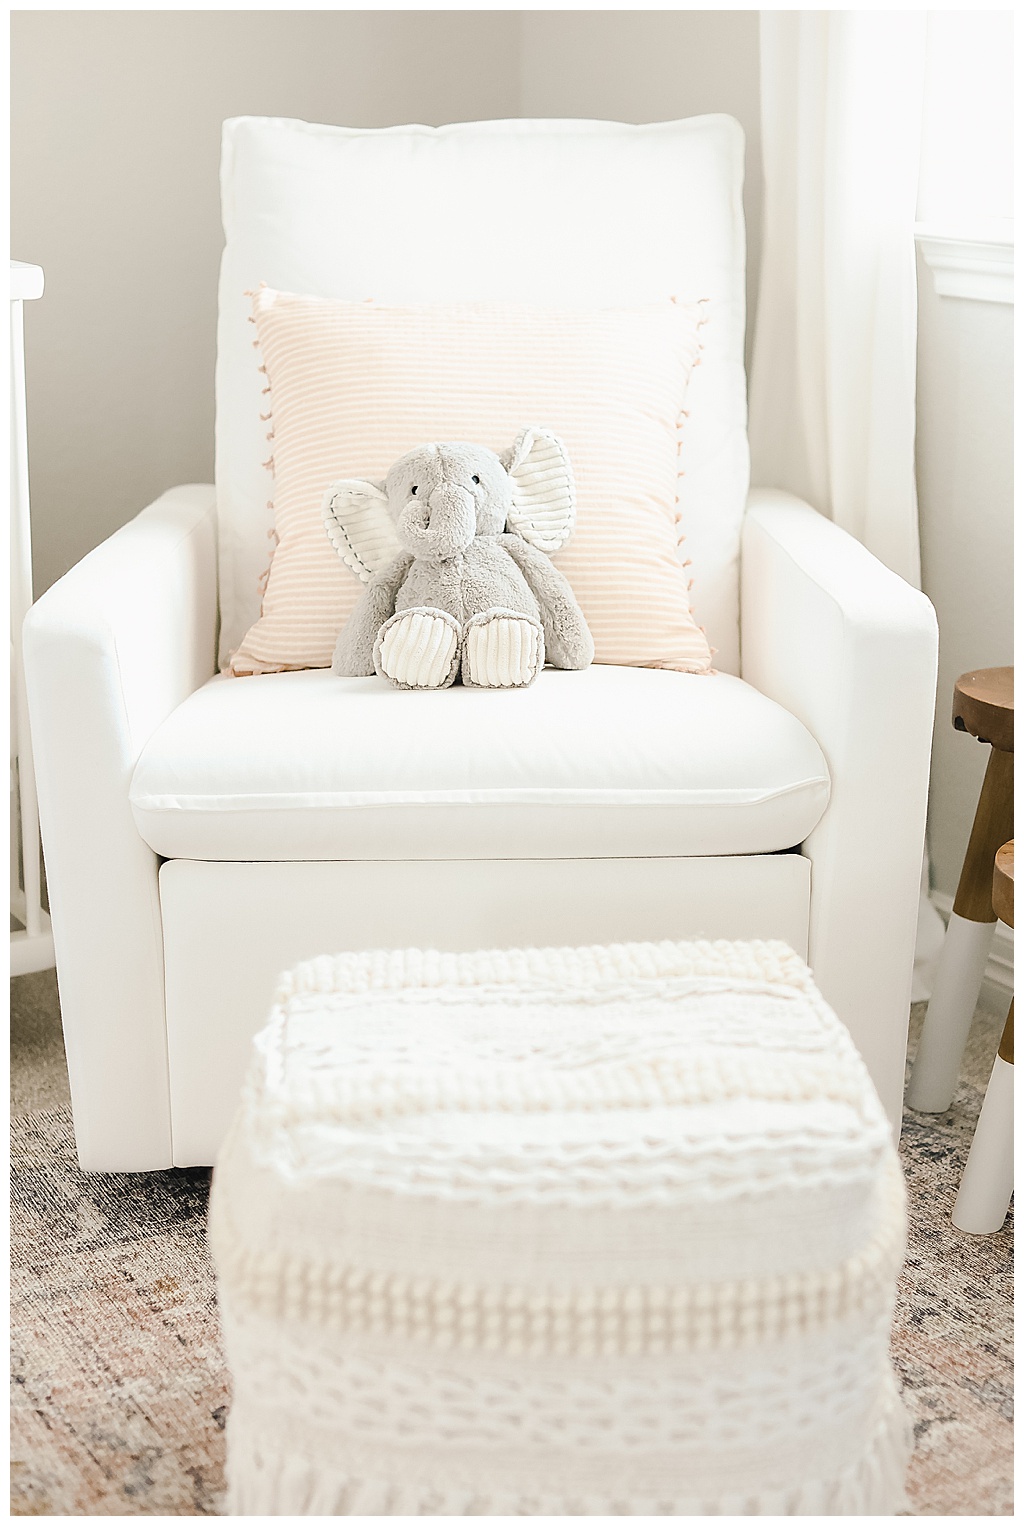 stuffed elephant on a white chair